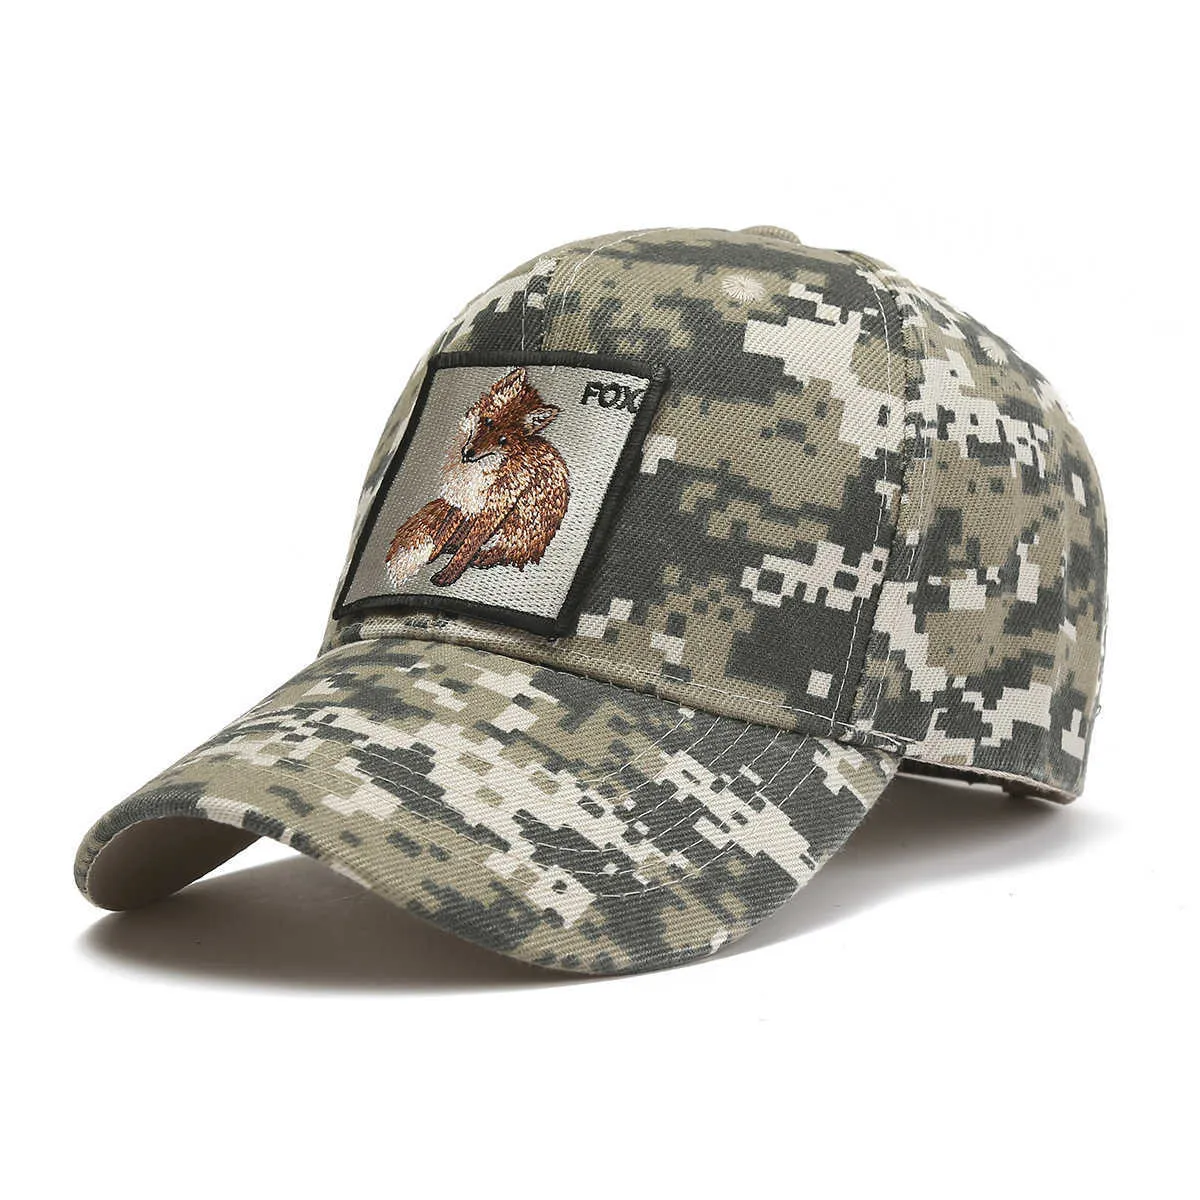 Rosyjska armia wojskowa EMR HATS dla George V Caps of Fishing Camping Wędrówki Podróżowanie Rosja Z Baseball Cap PMC Hats L230523